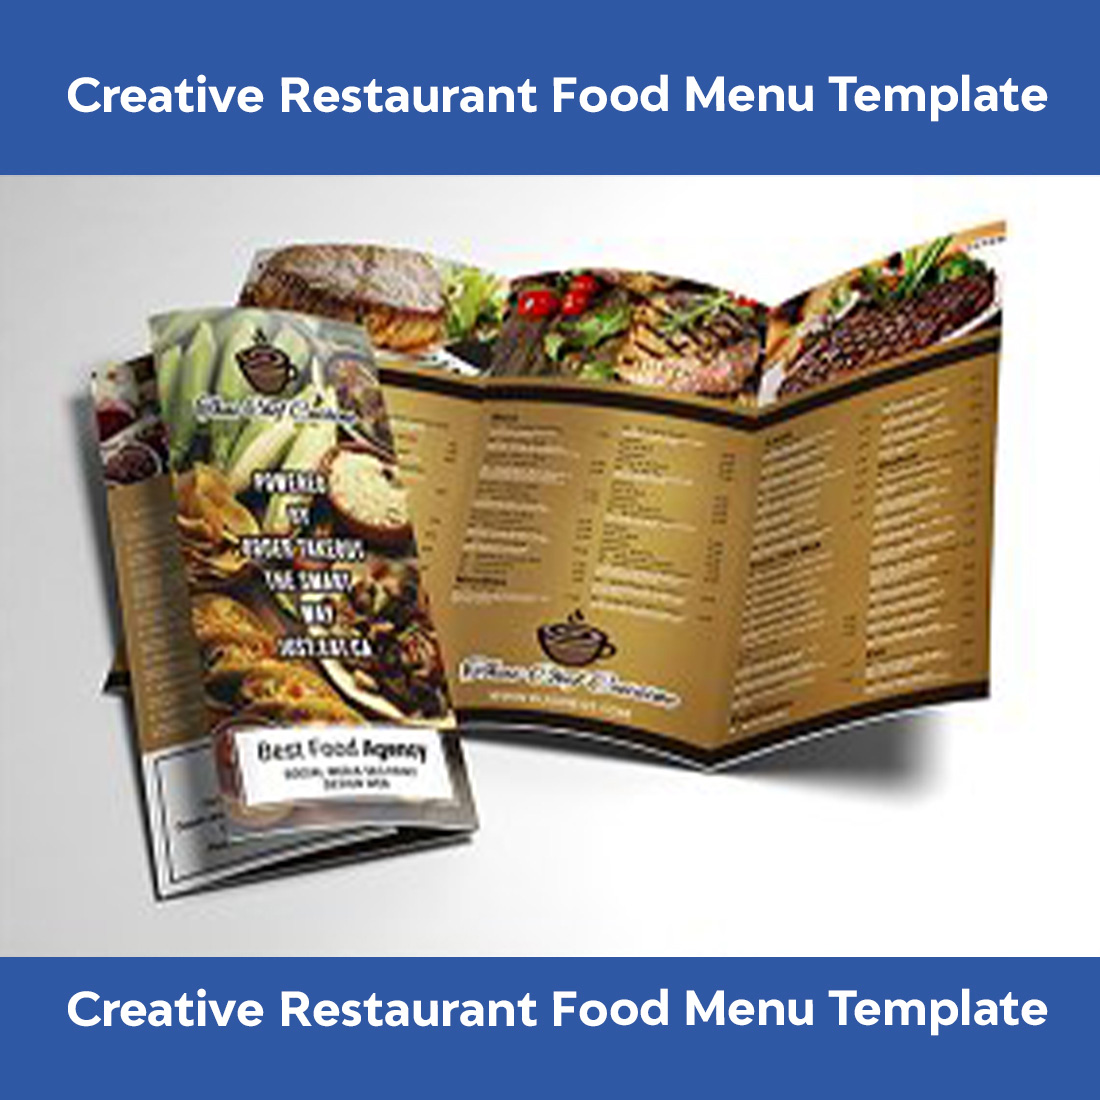 Creative Restaurant Food Menu Template Design preview image.